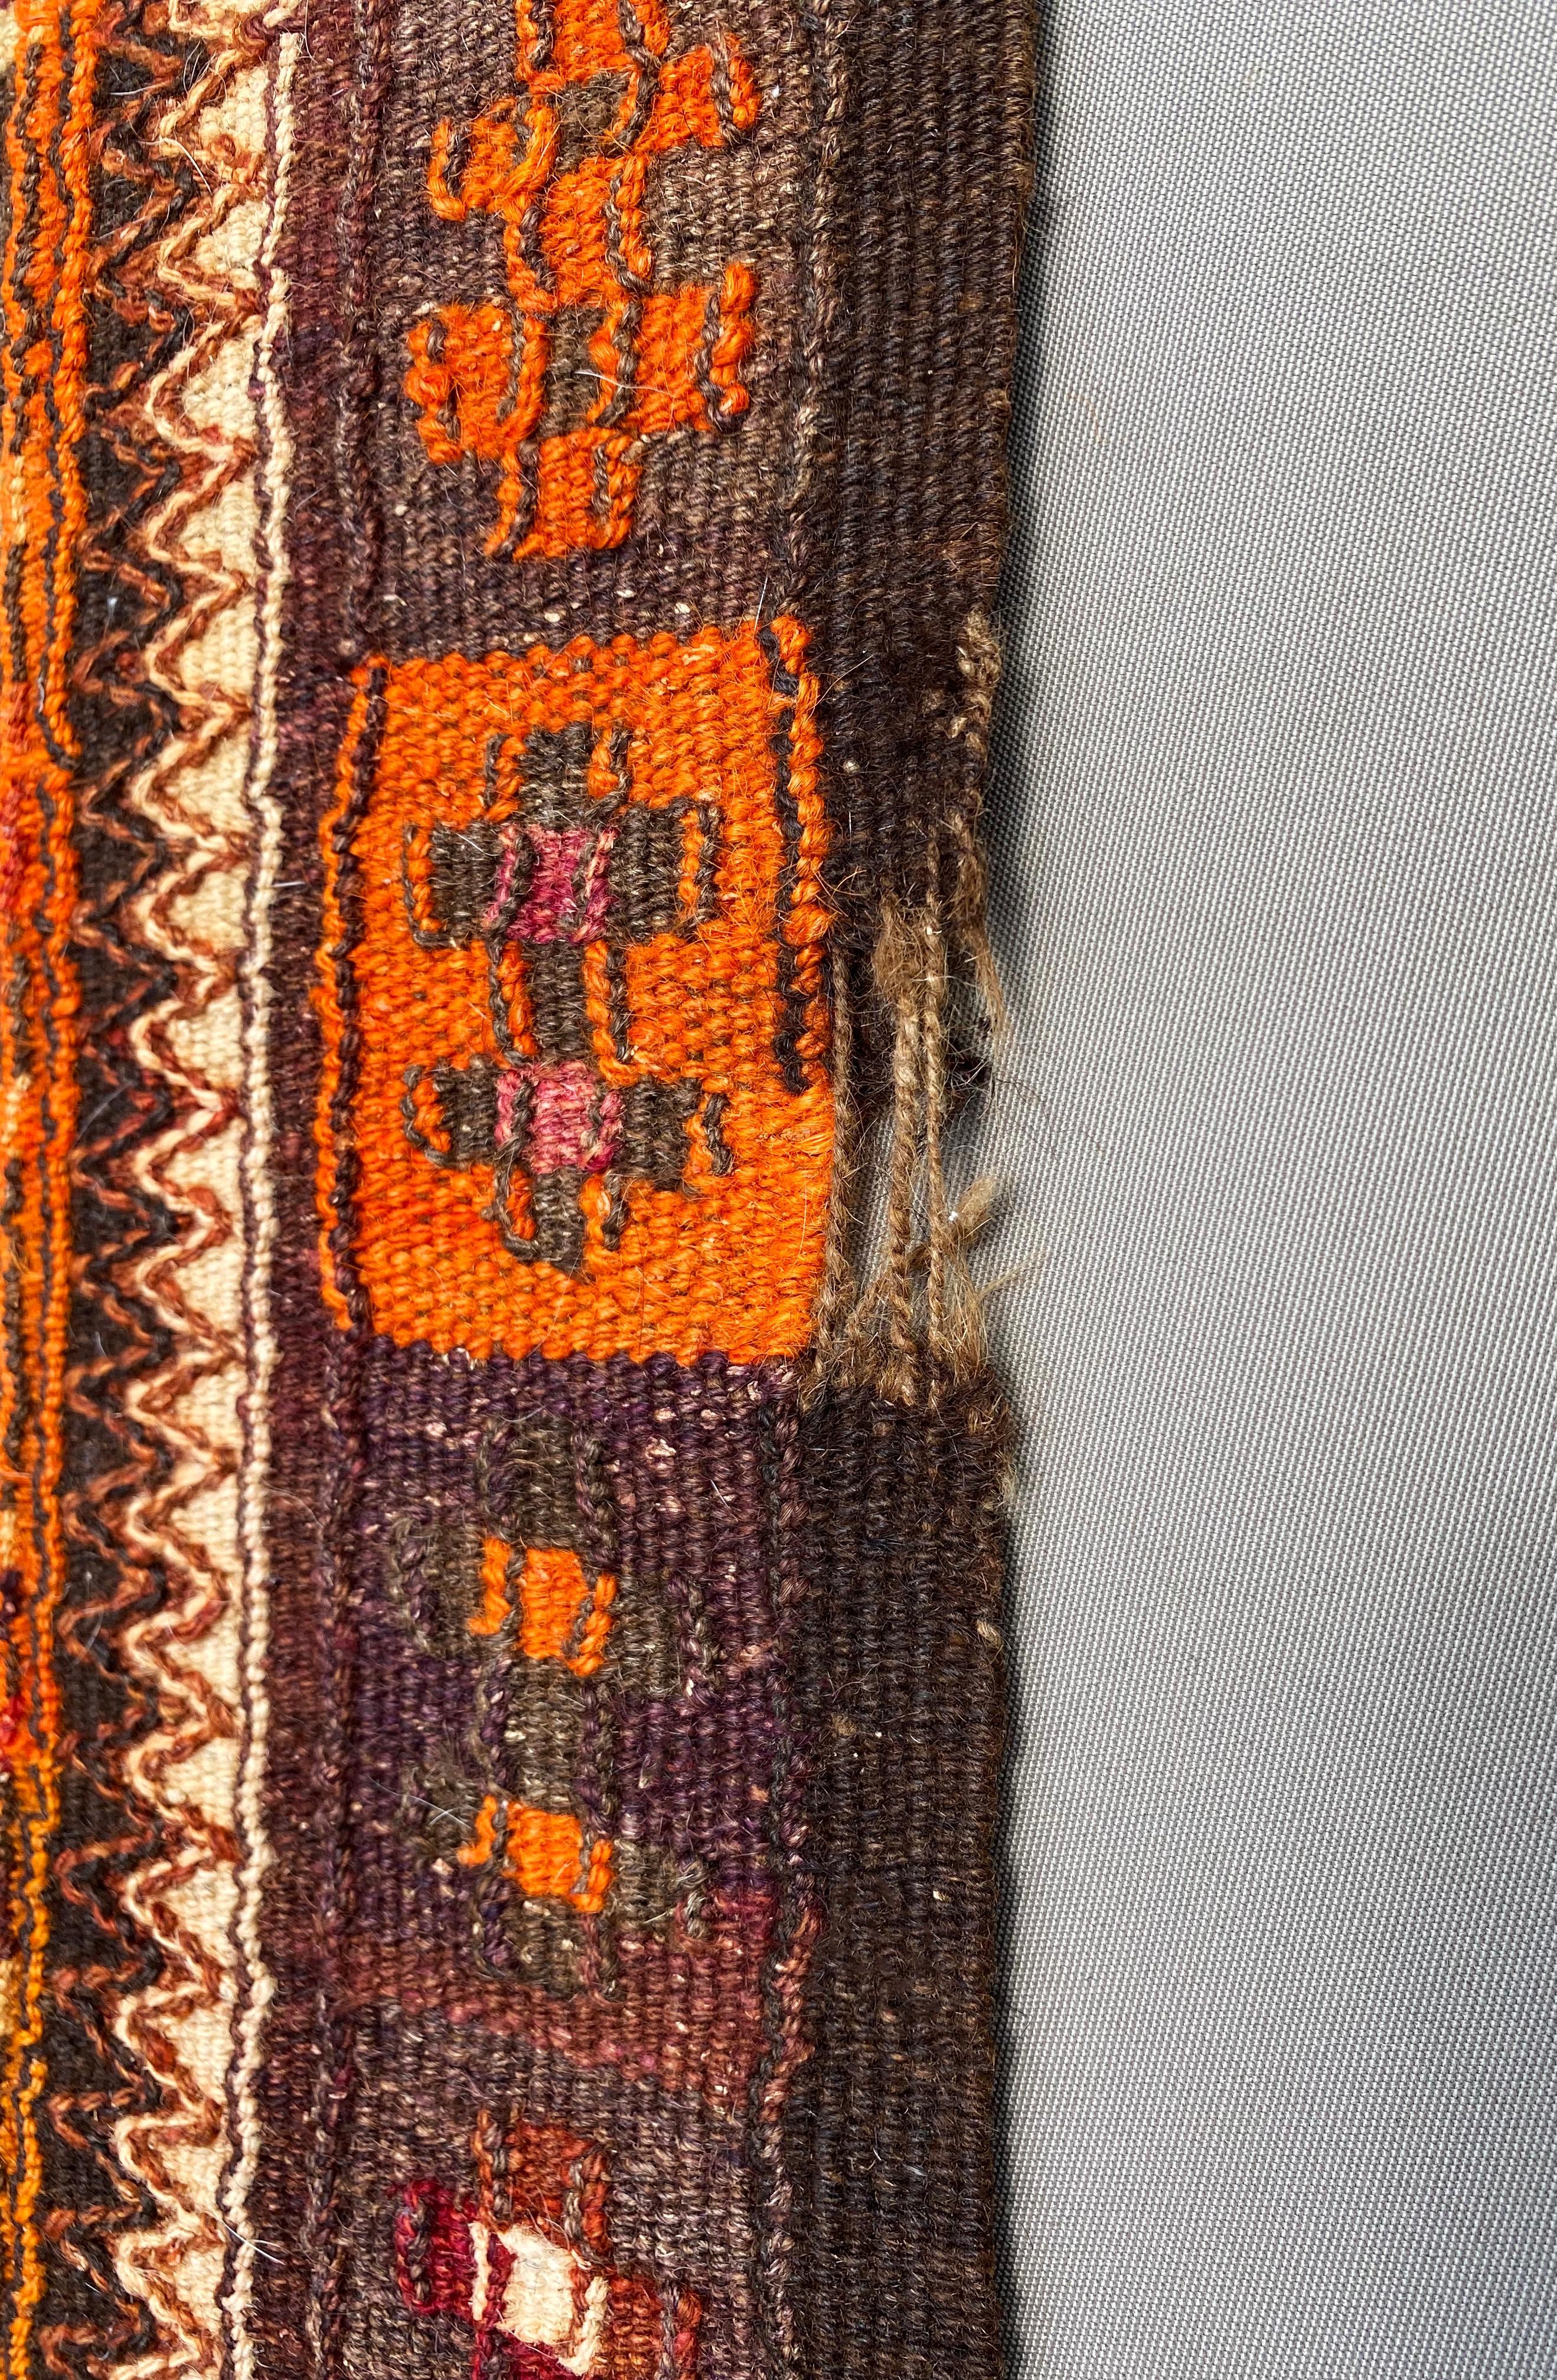 Uzbekistan Tartari Ranghi Kilim Rug from Wool, Early 20th Century For Sale 6